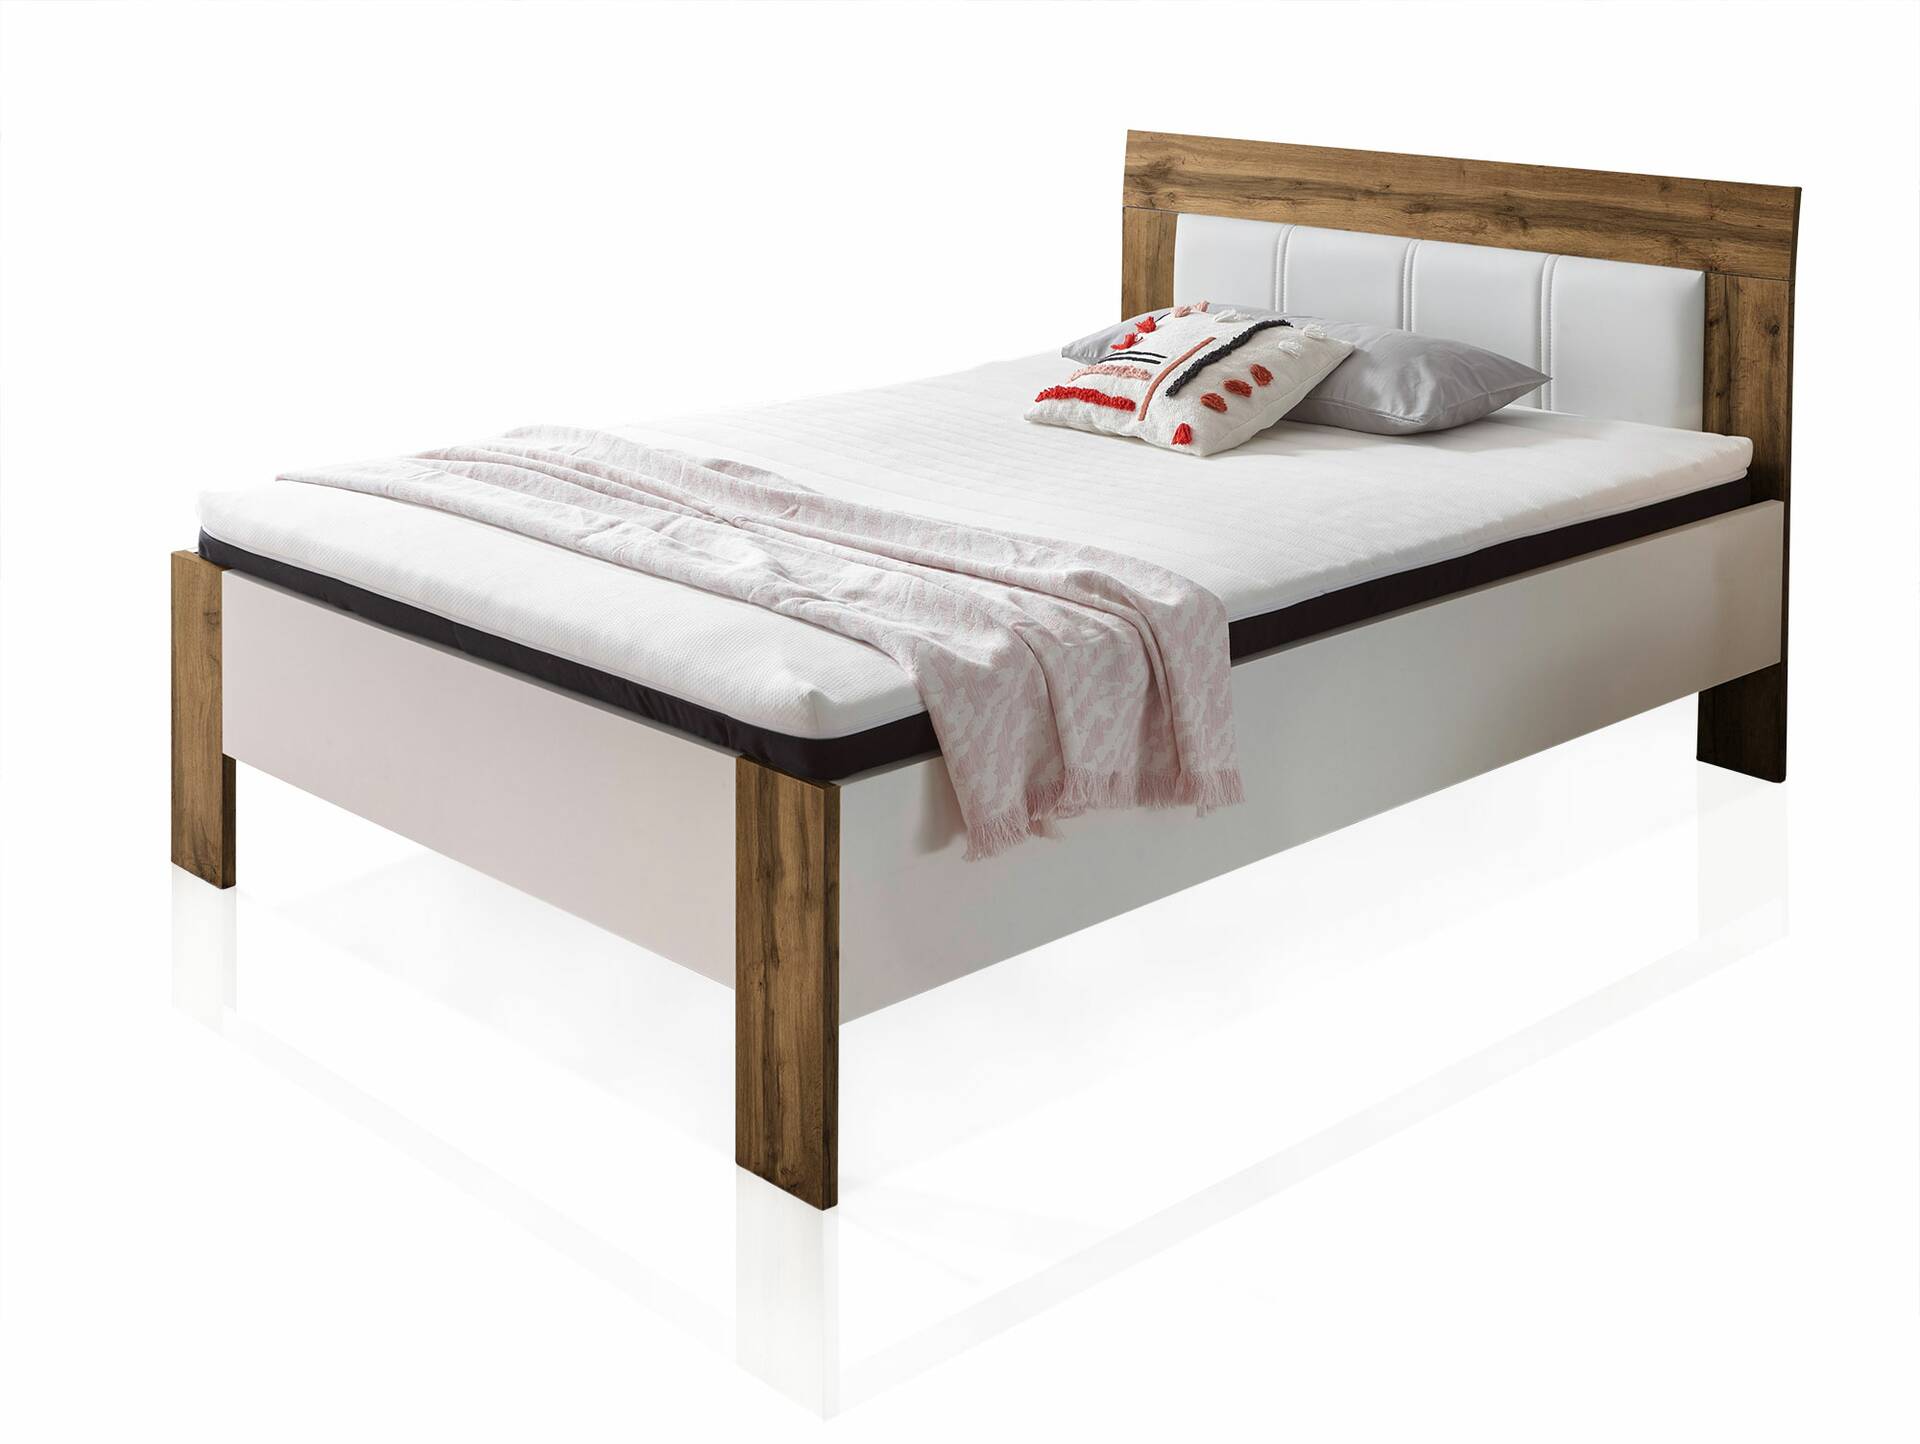 SERRY Bett / Jugendbett komplett mit Matratze und Rost, 140x200 cm, Material Dekorspanplatte 